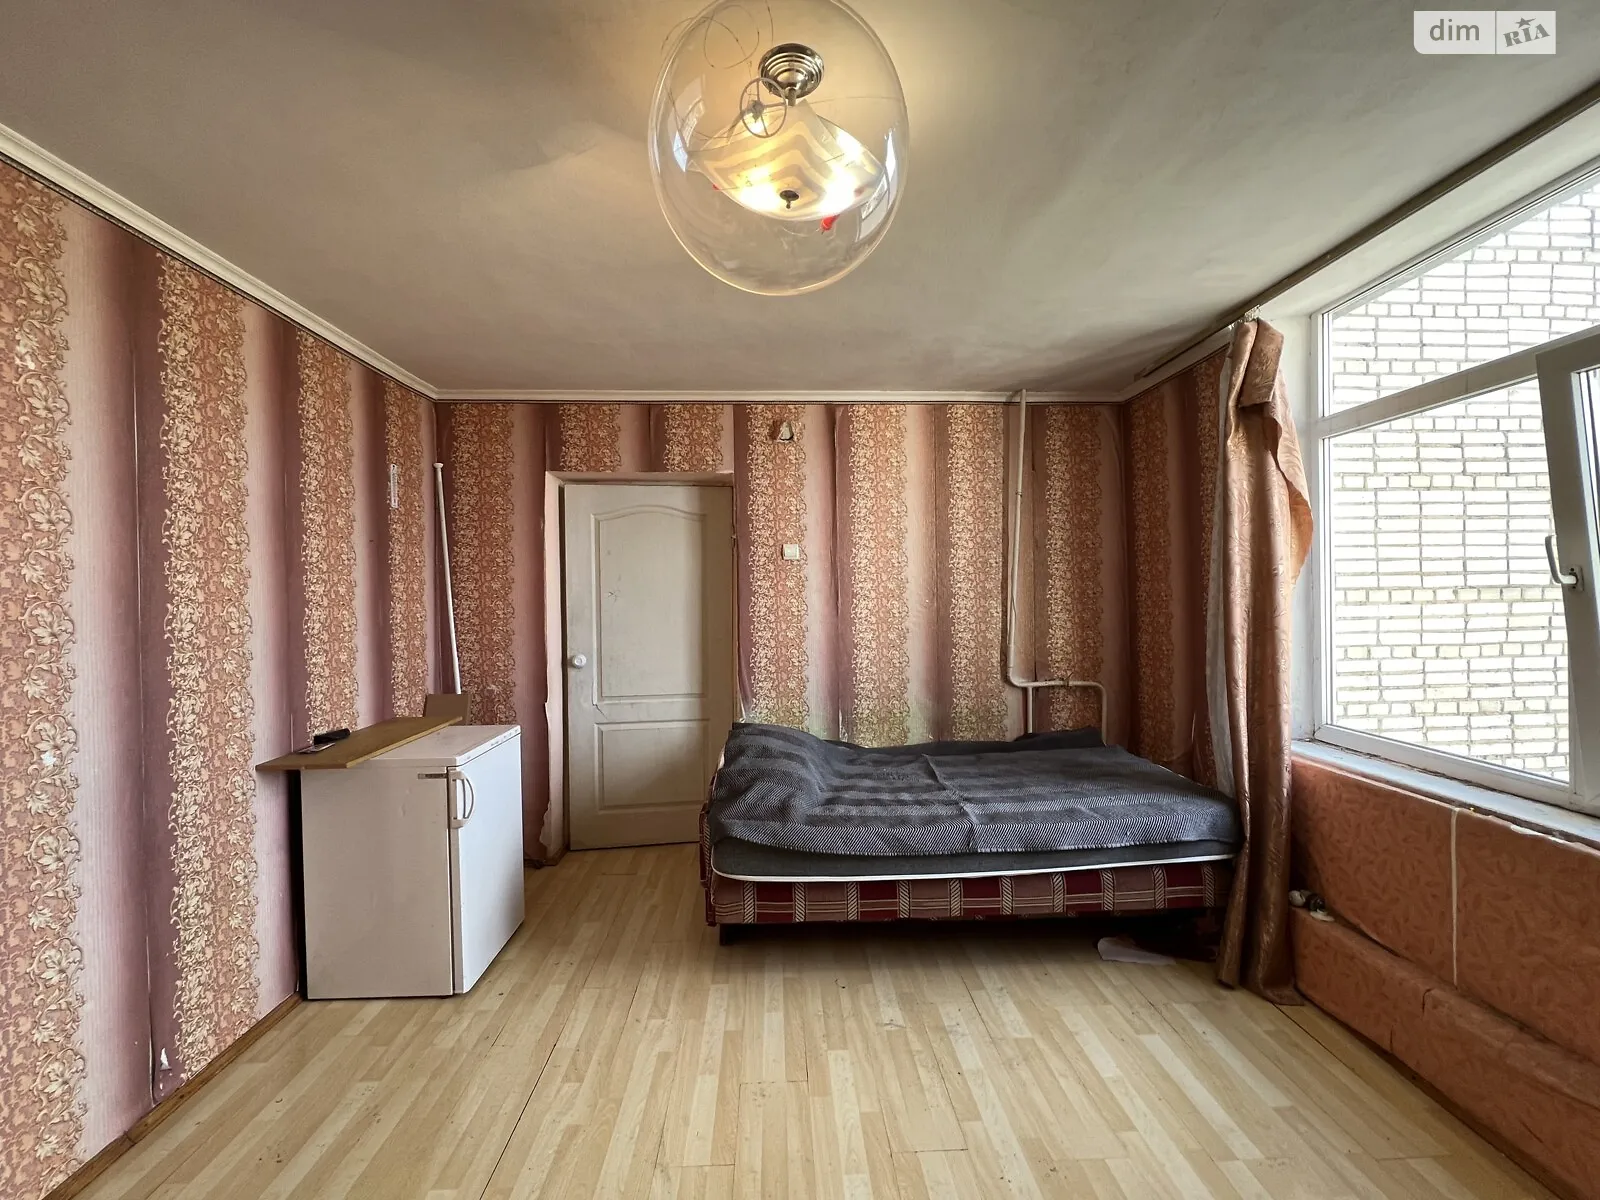 Продается комната 21 кв. м в Виннице, цена: 16500 $ - фото 1